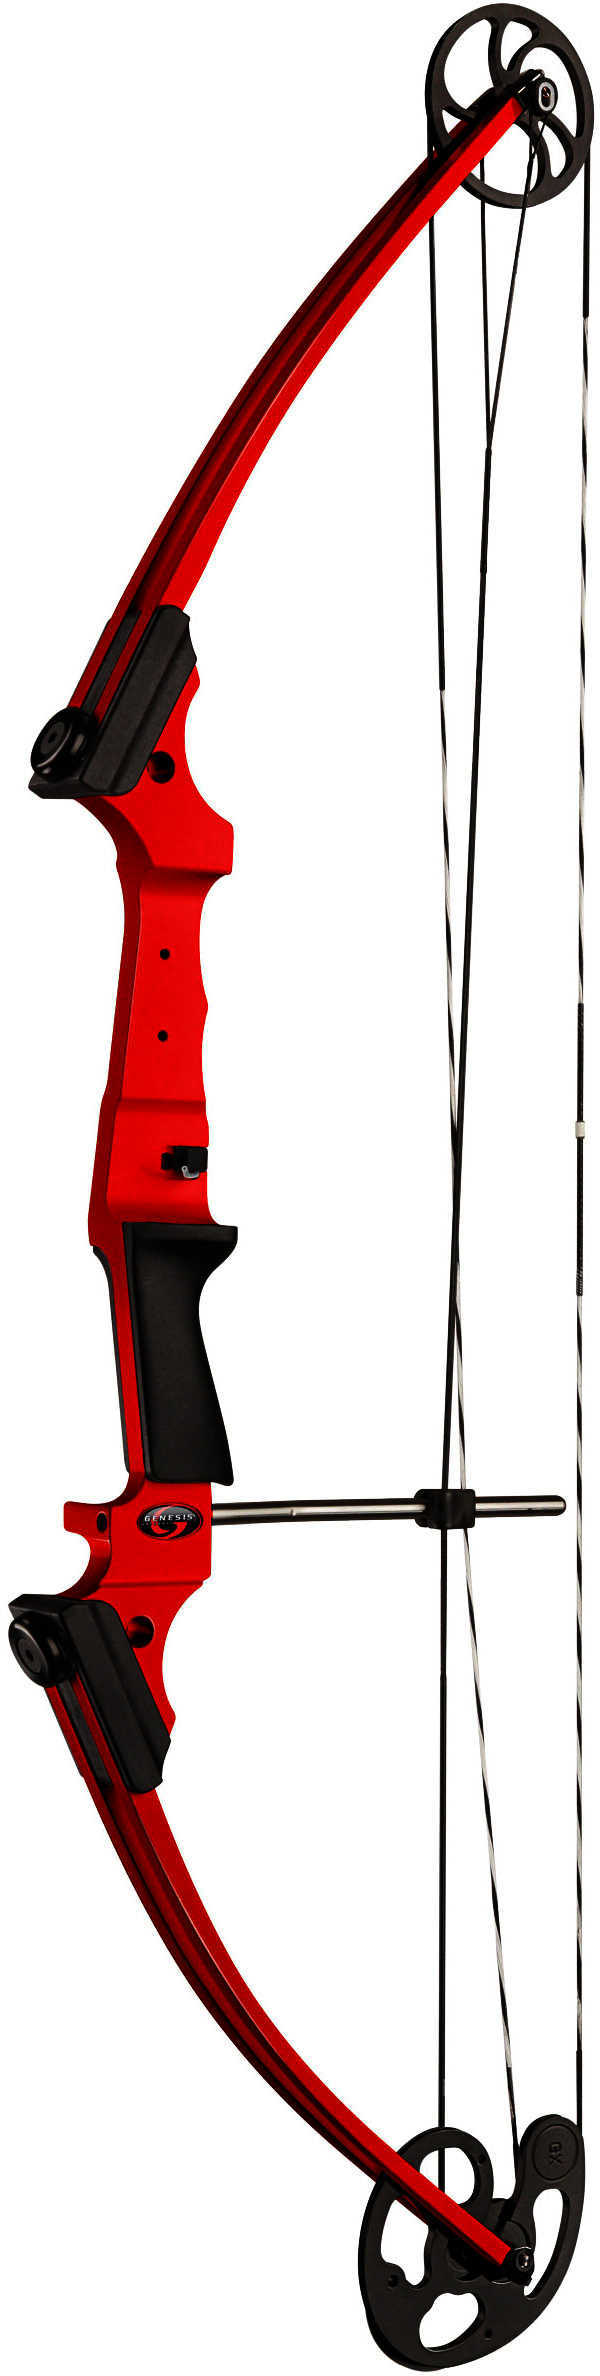 Genesis Bow Red RH Model: 10476